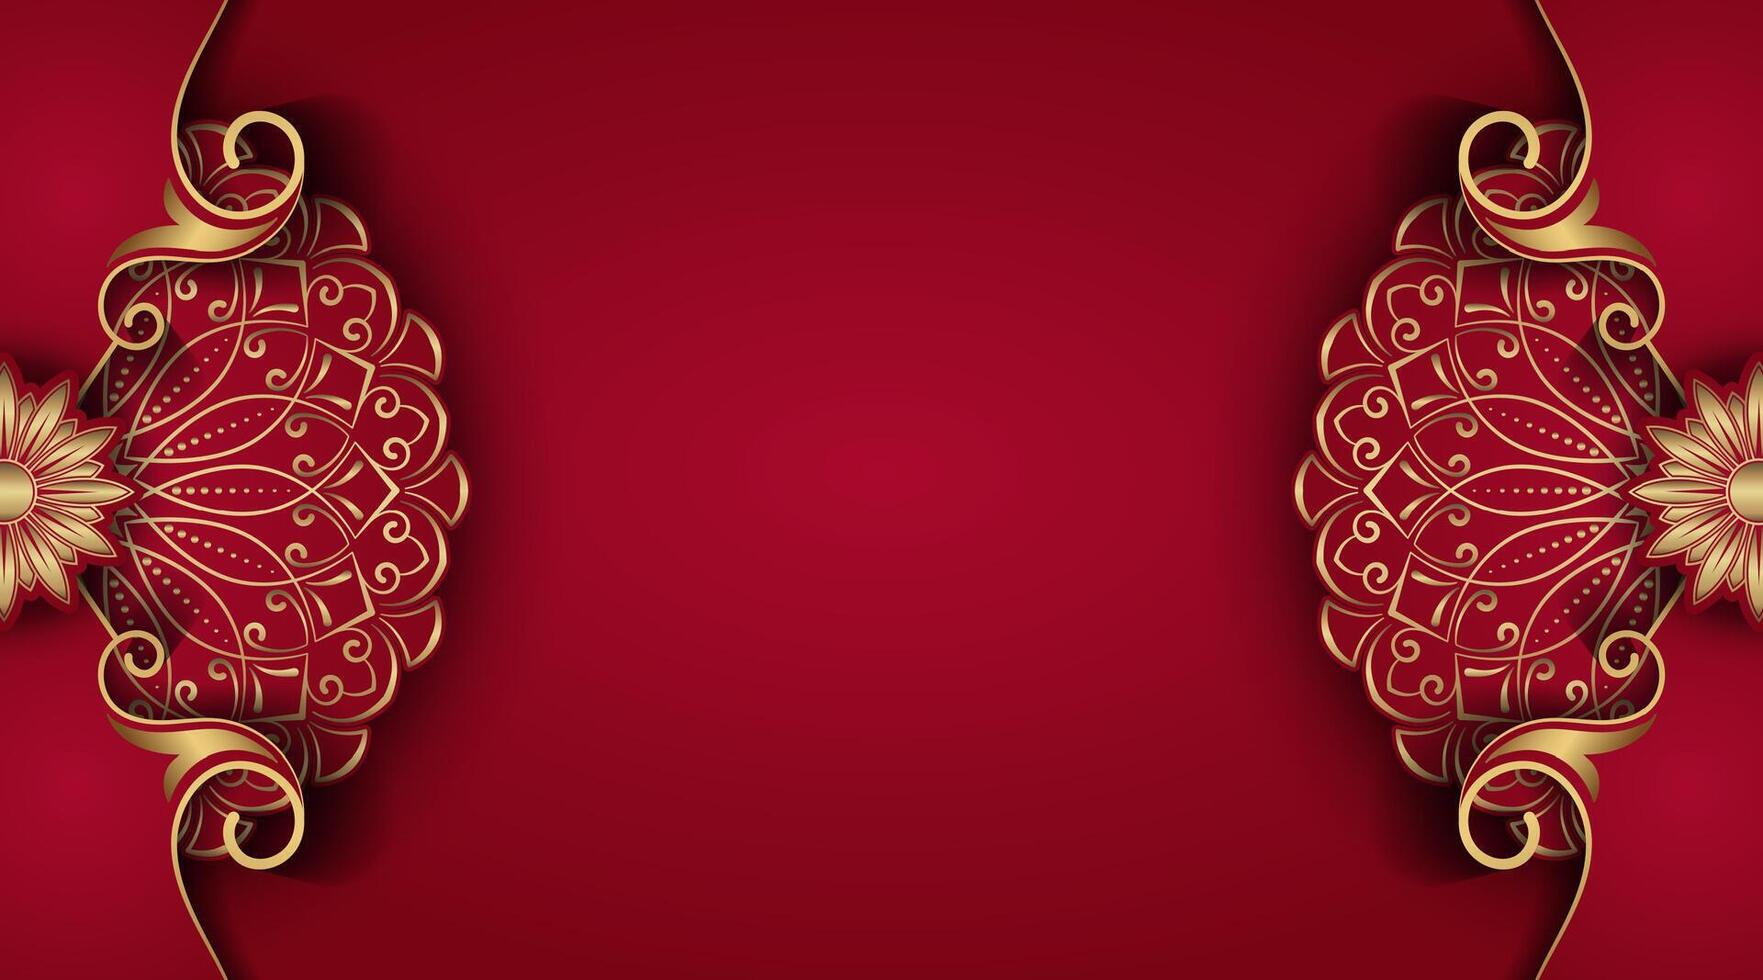 rot Luxus Hintergrund mit Mandala Ornament vektor